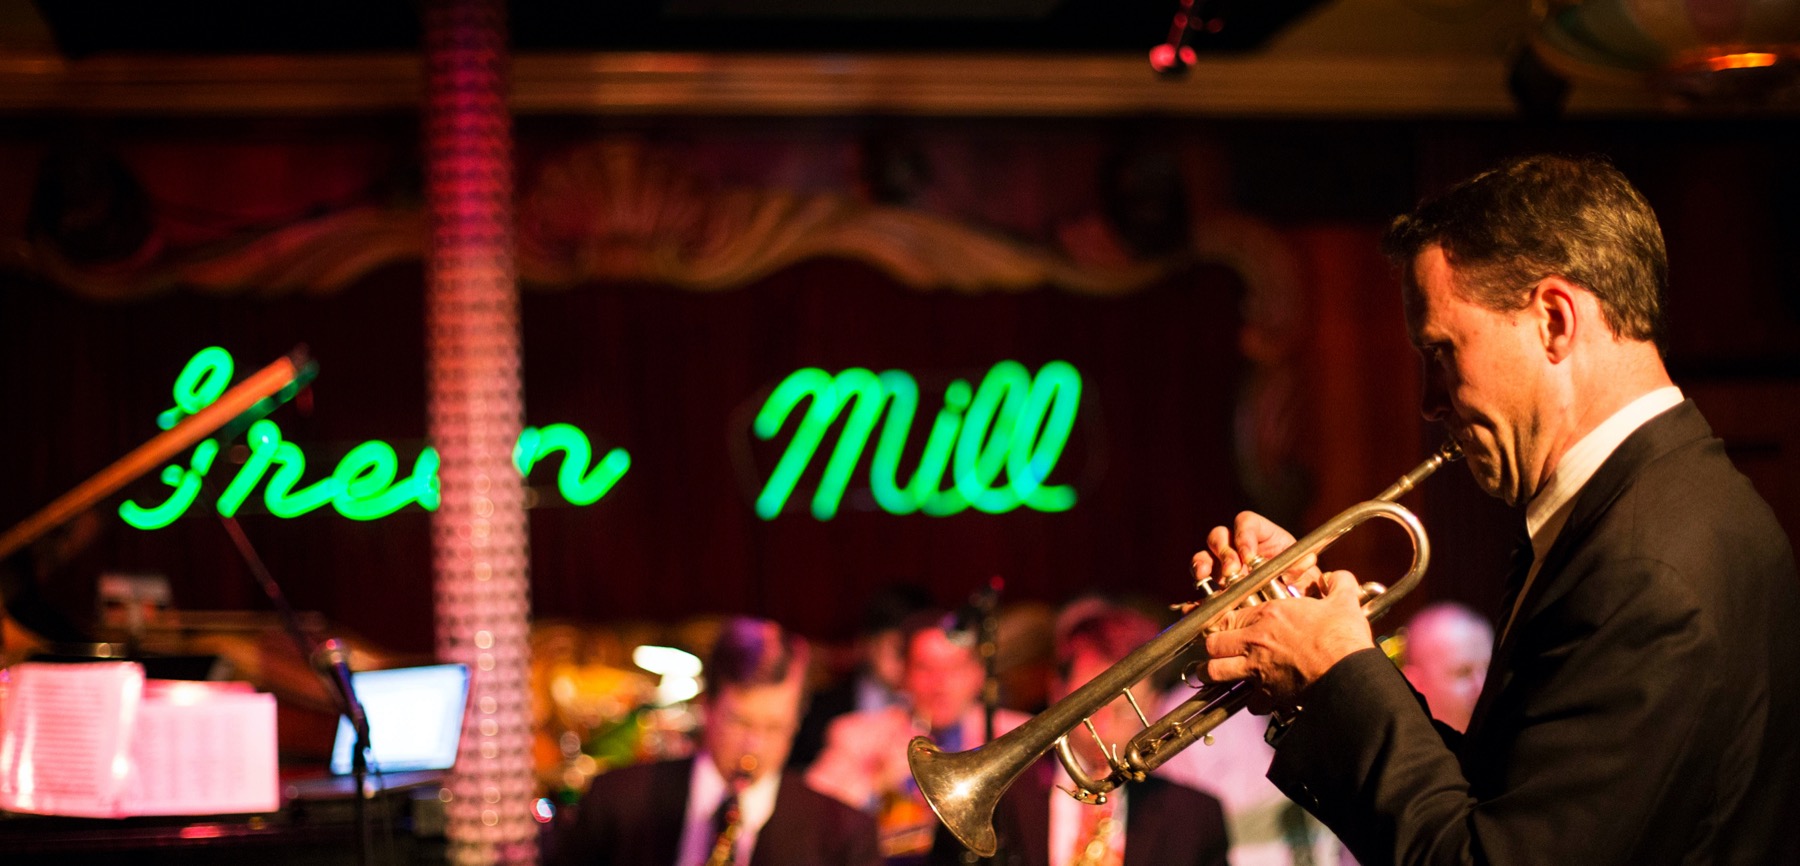 Roaring 20s Jazz Band Wall Mounted Bottle Opener prohibition speakeasy